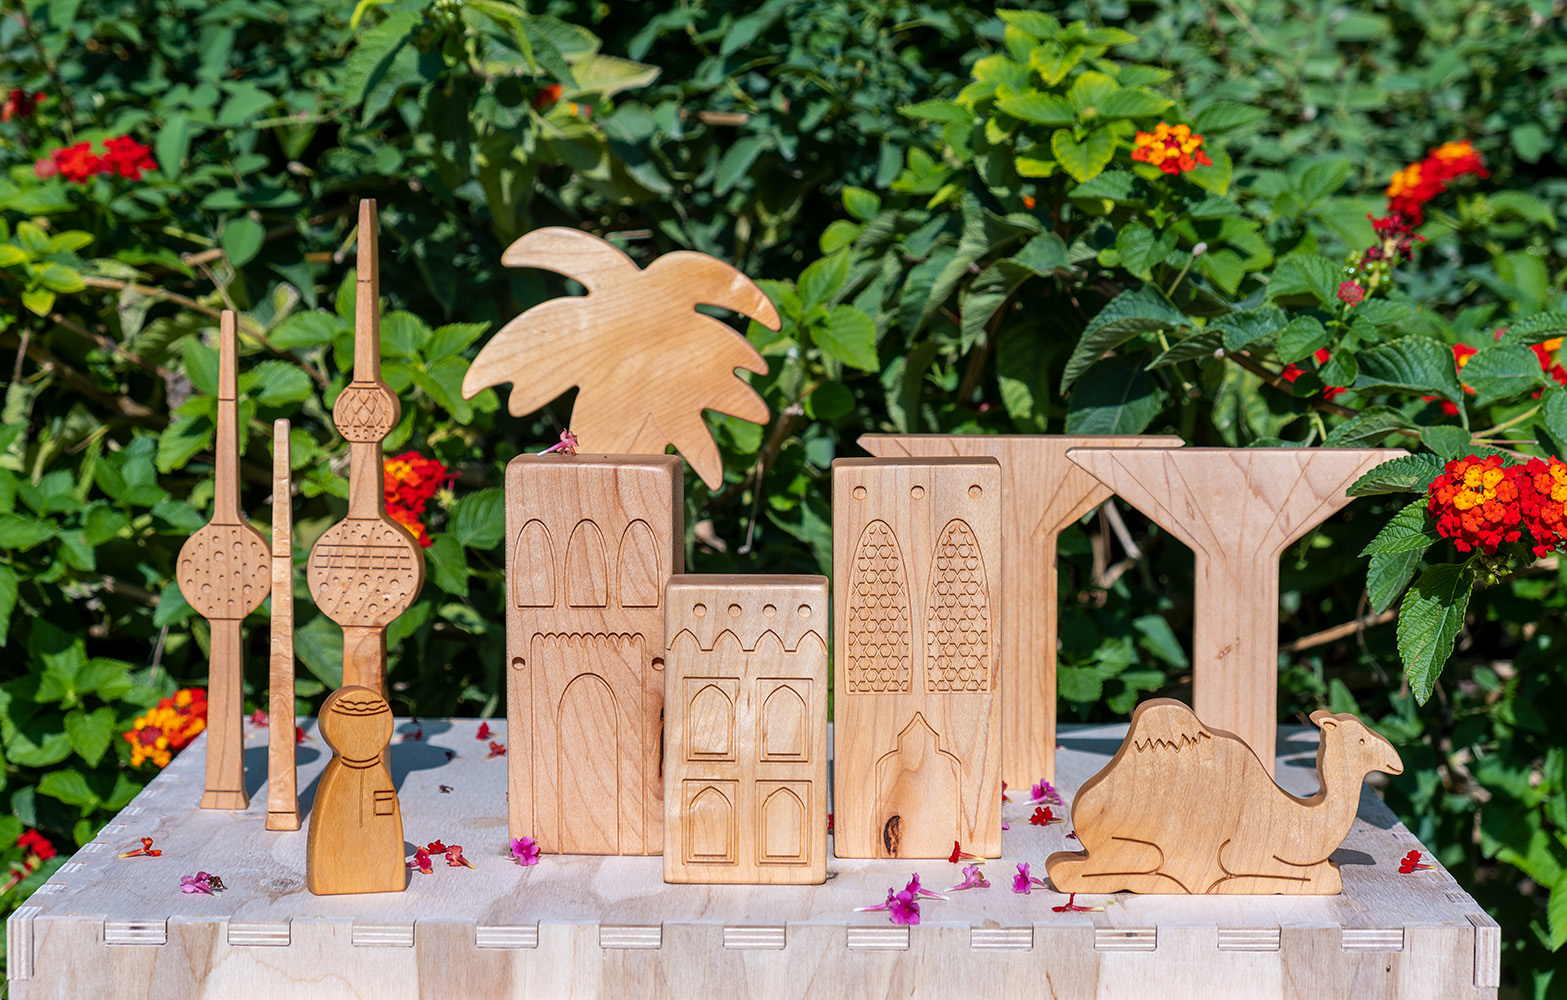 Kuwait landmarks made into wooden toys